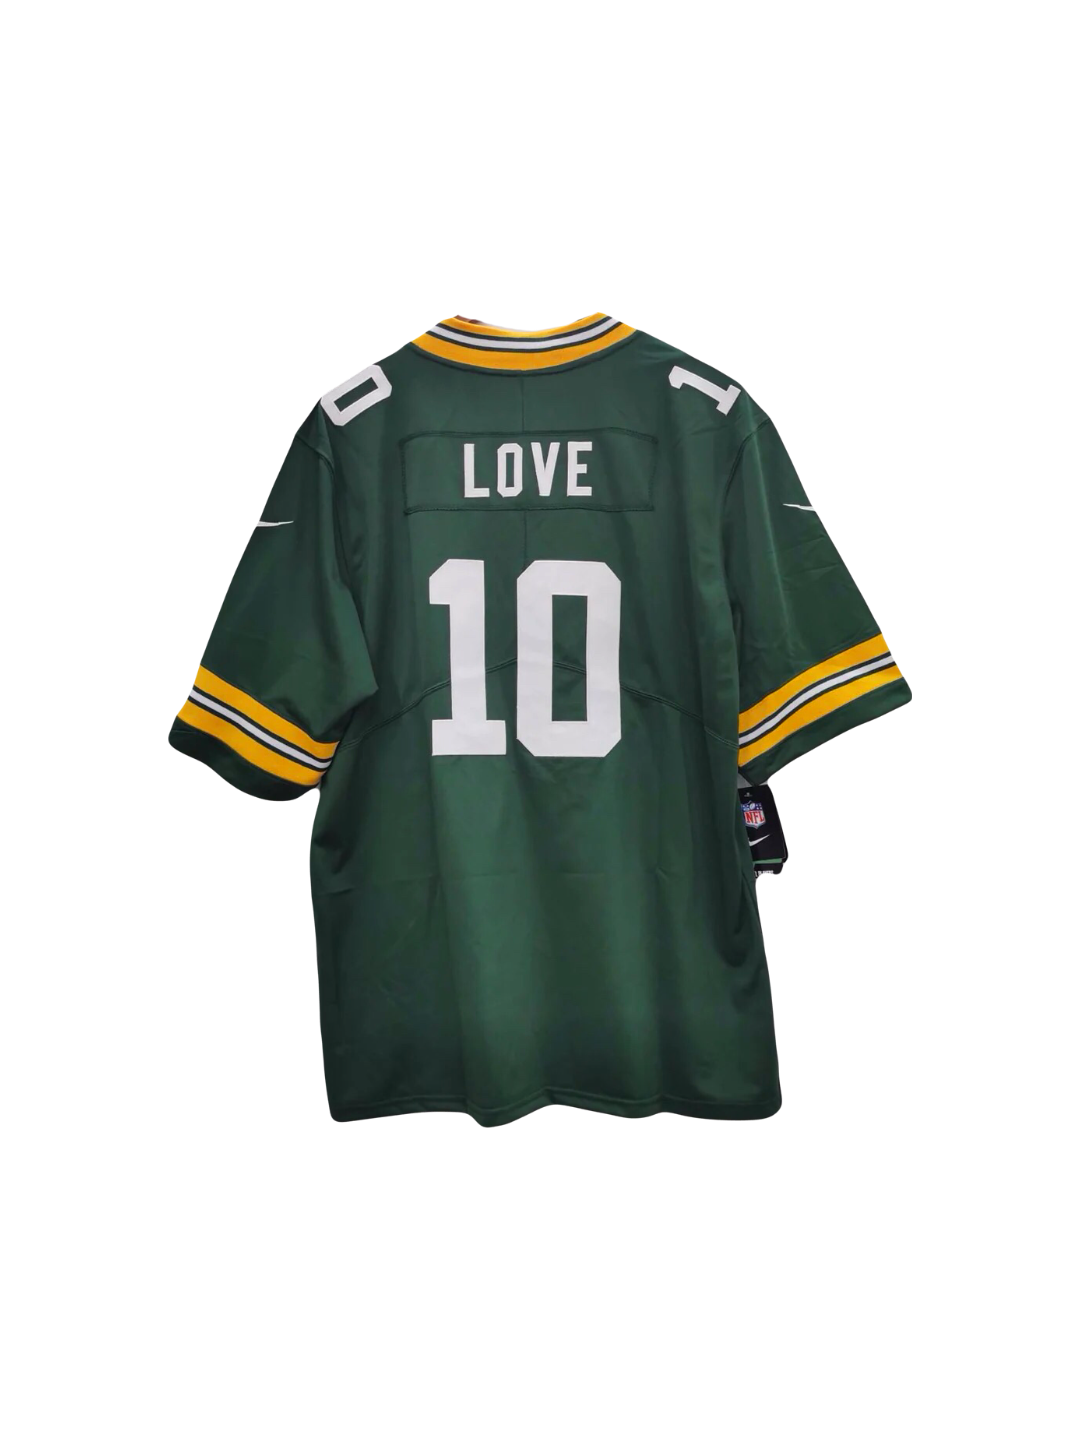 Jordan Love Green Bay Packers NFL Nike Vapor Limited Home Jersey - Green